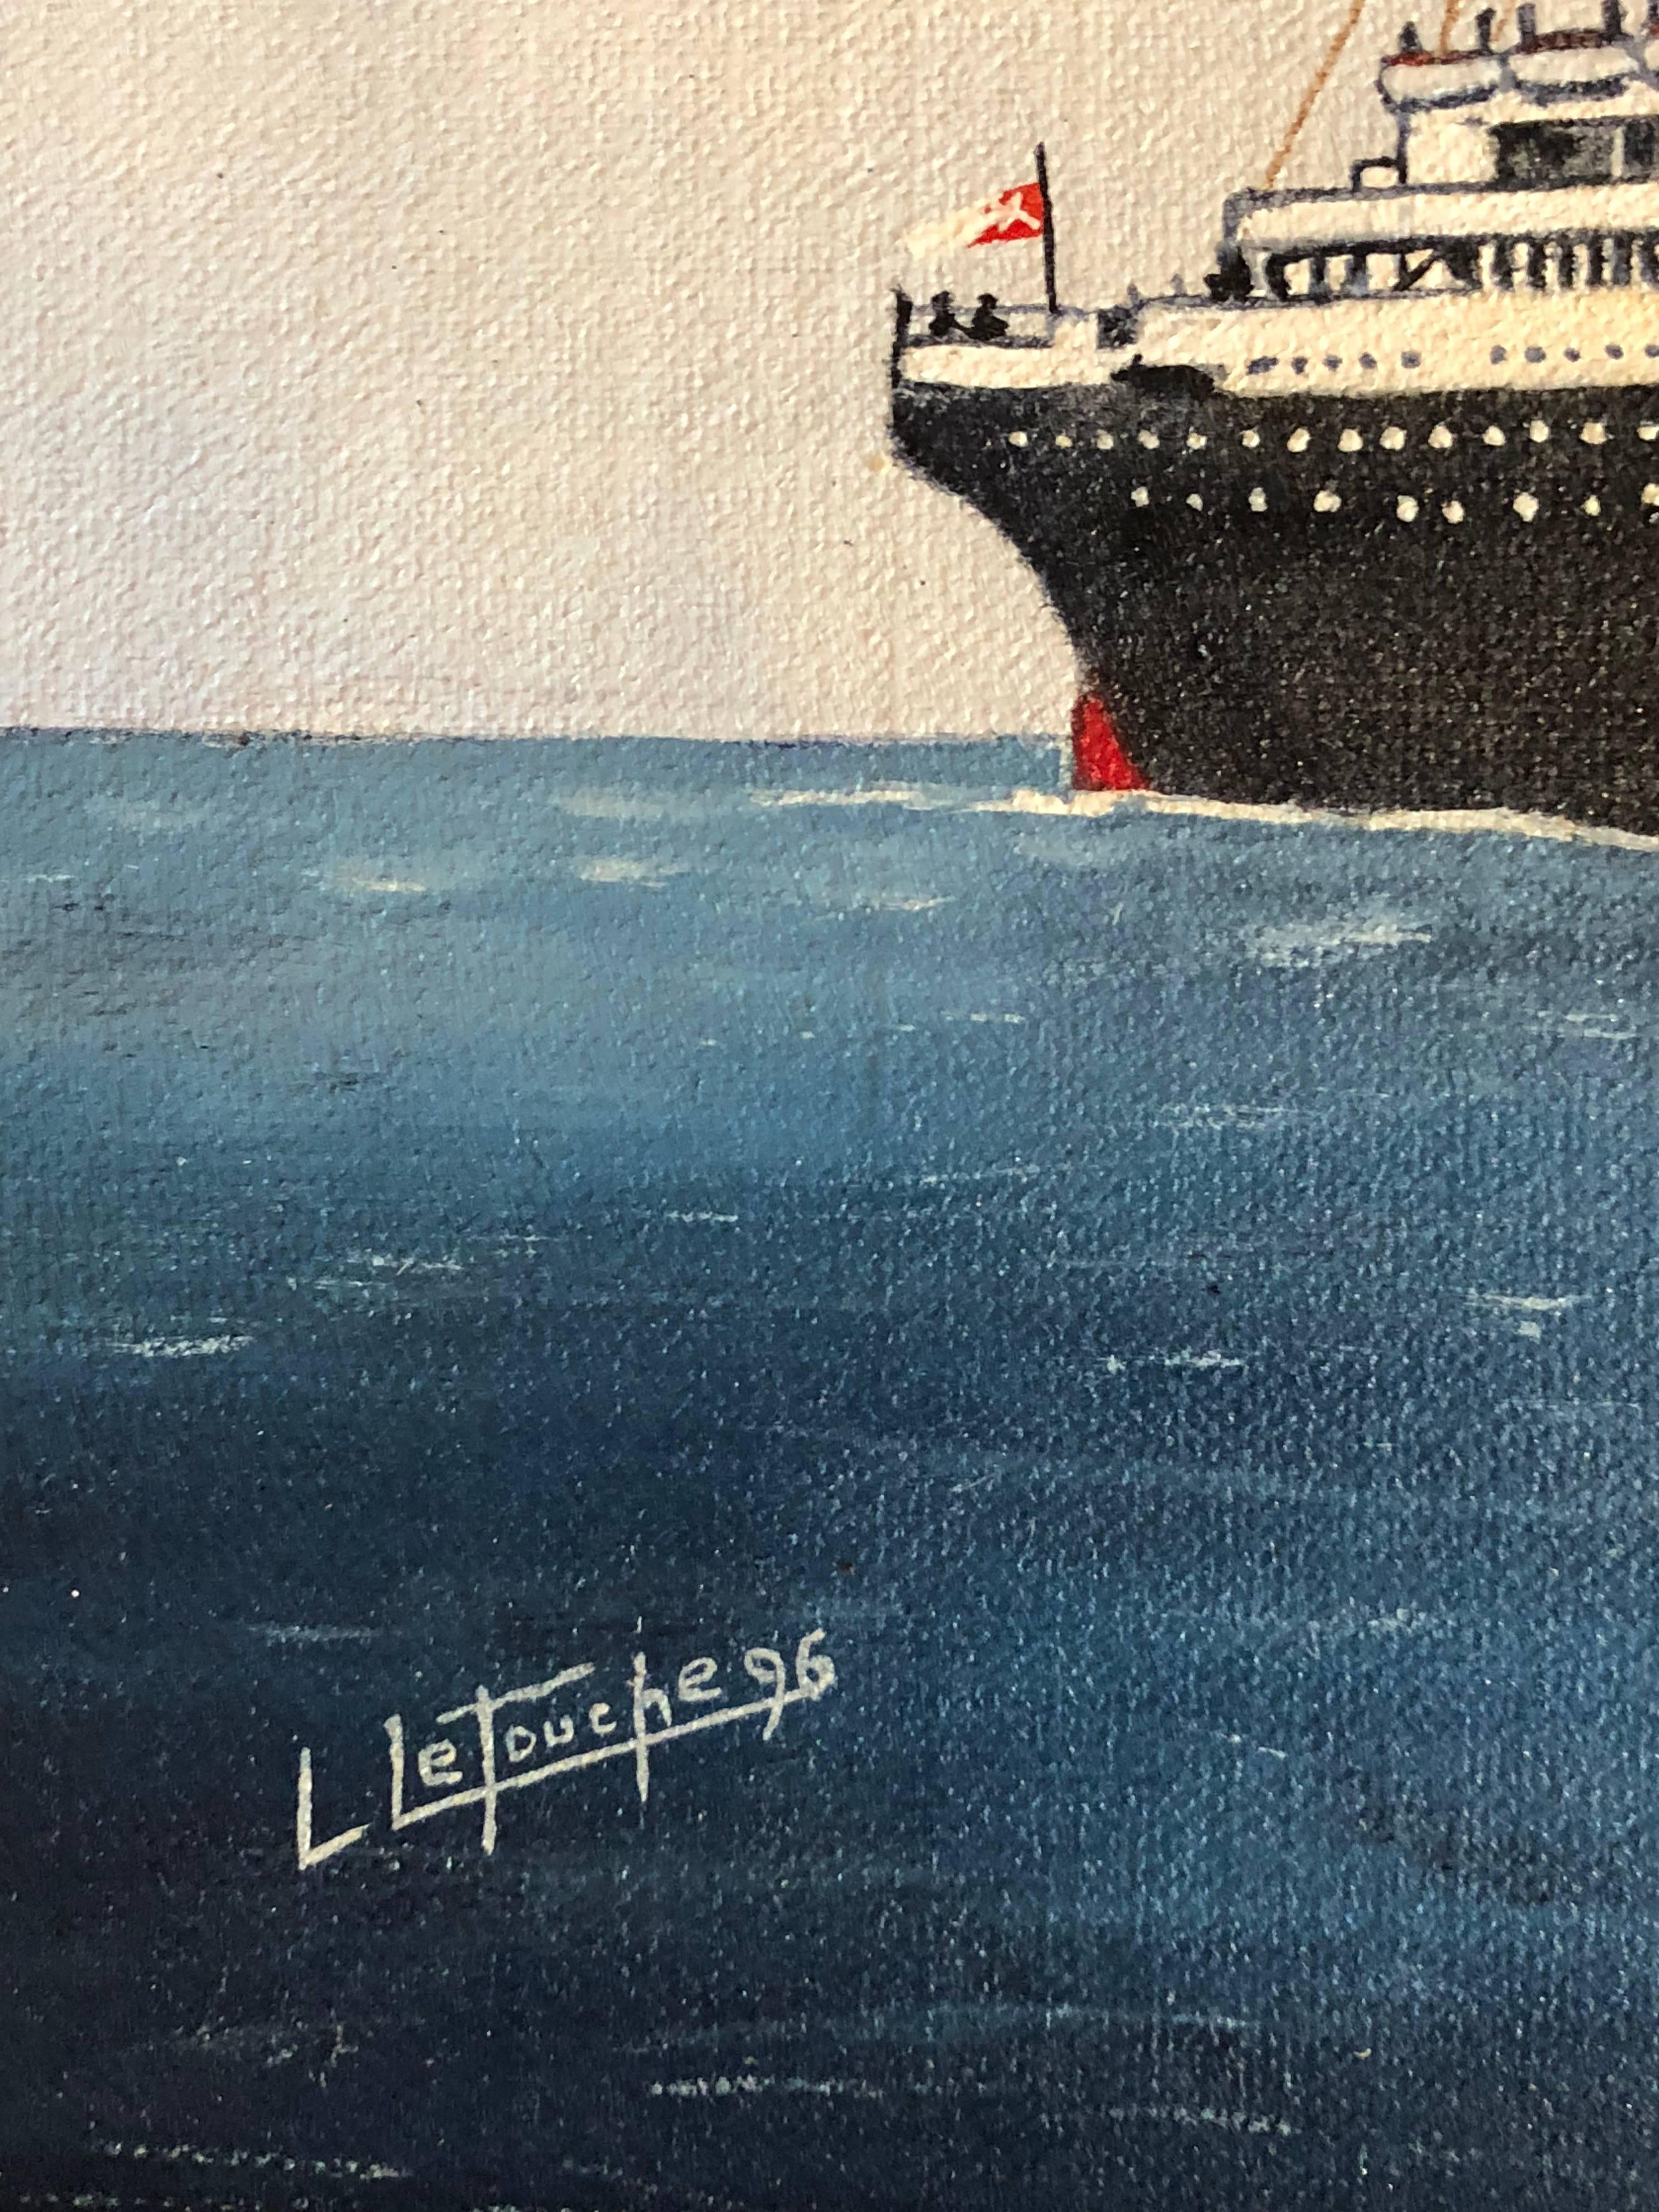 titanic painting